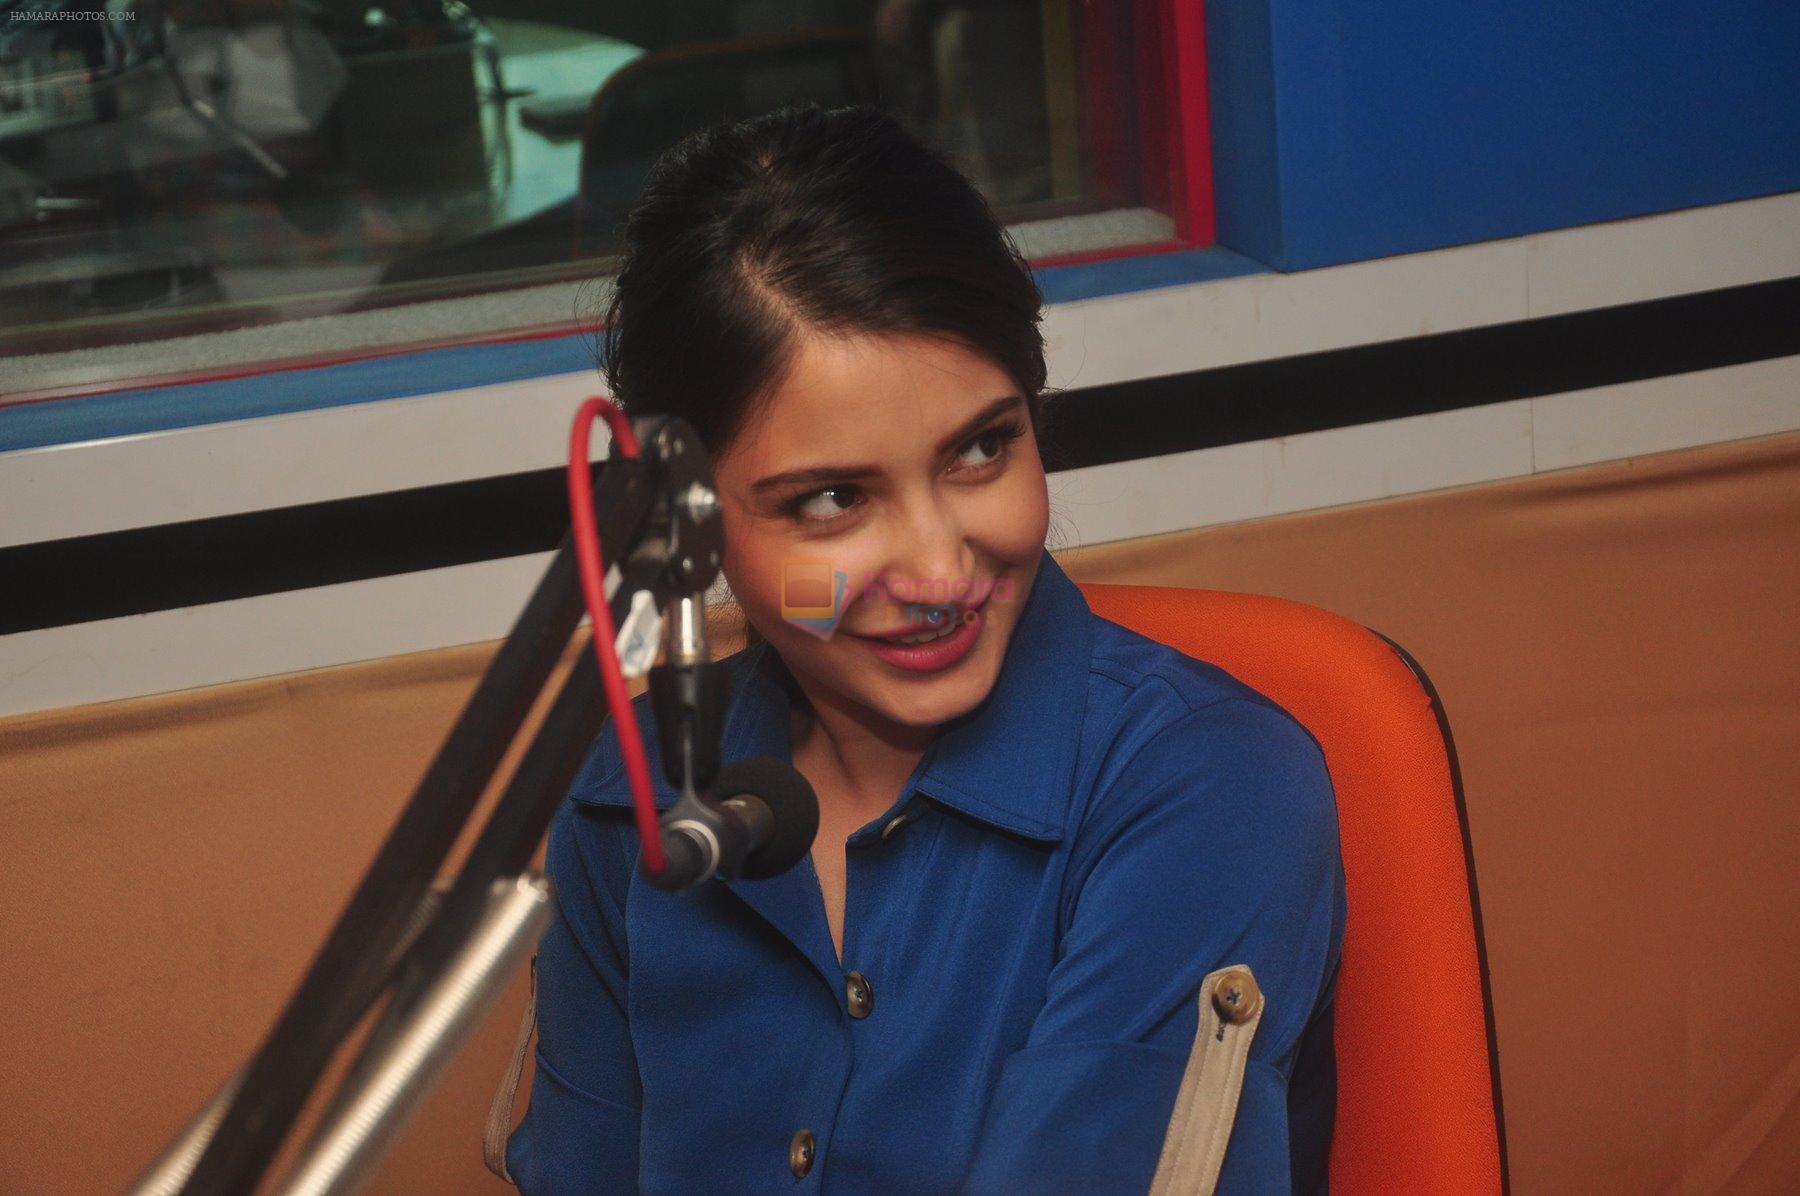 Anushka Sharma at Red FM in Mumbai on 19th Feb 2015